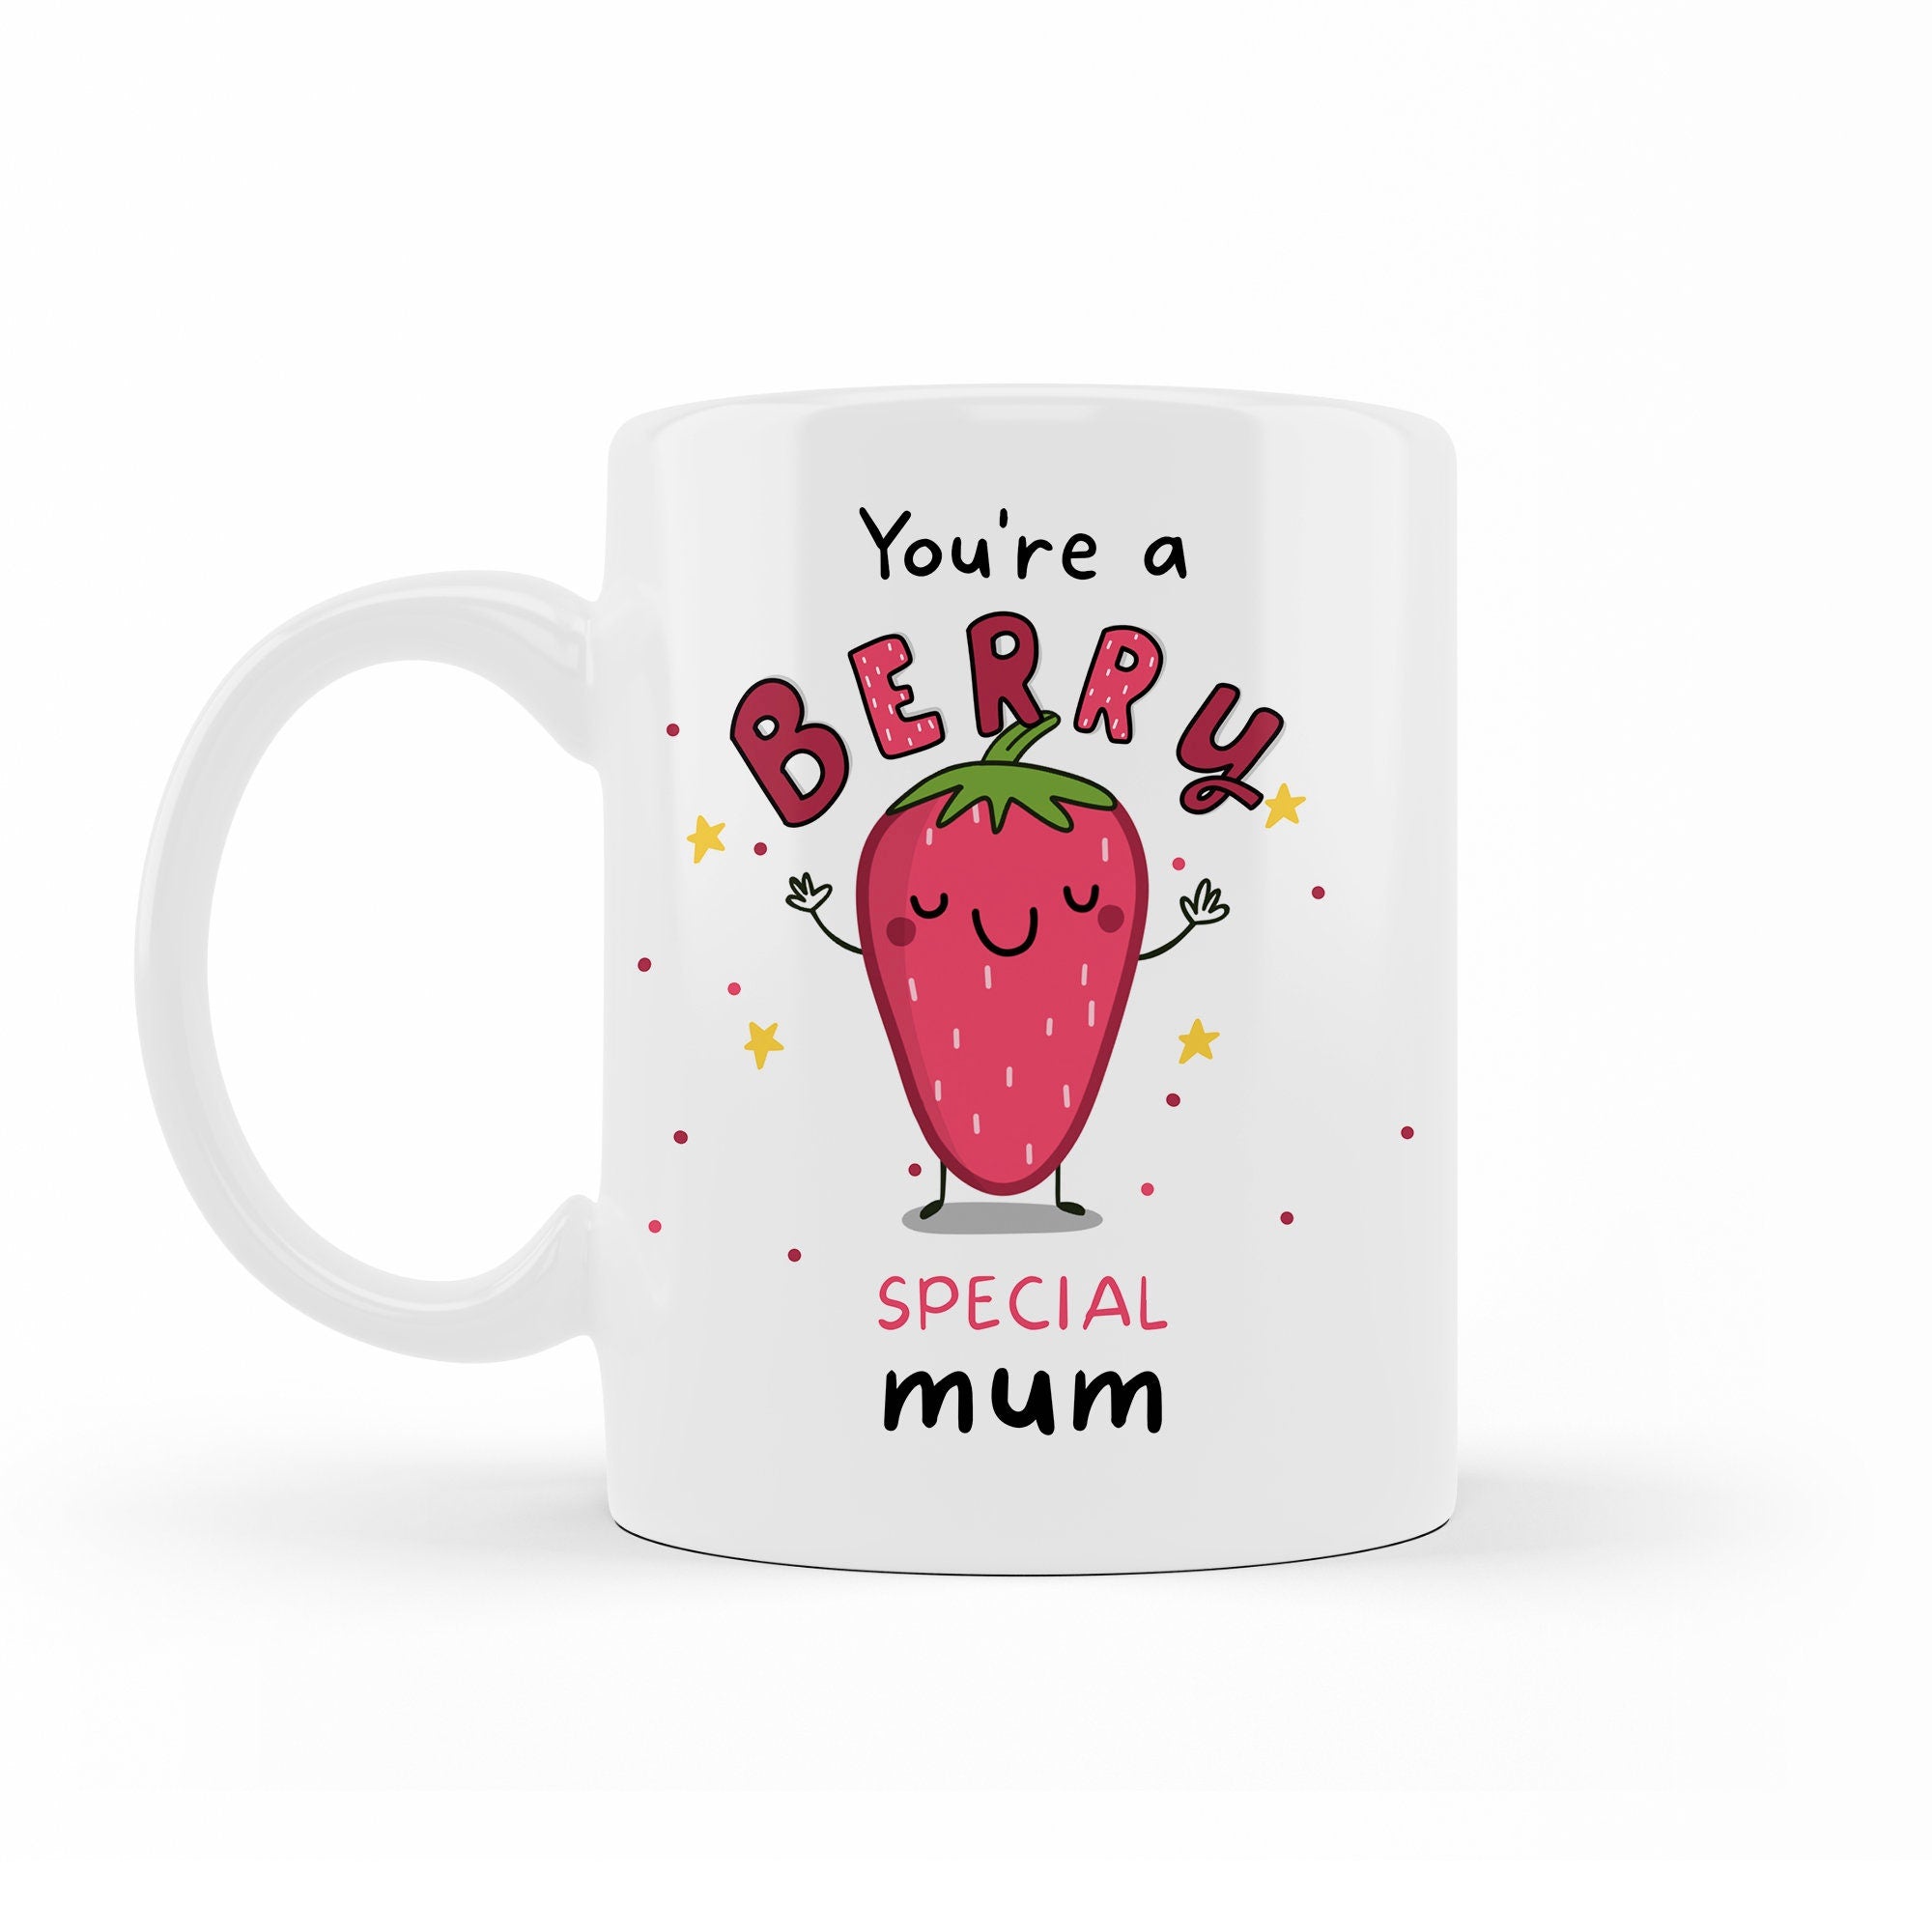 Best Mum Mug - Berry Best Mum Cup